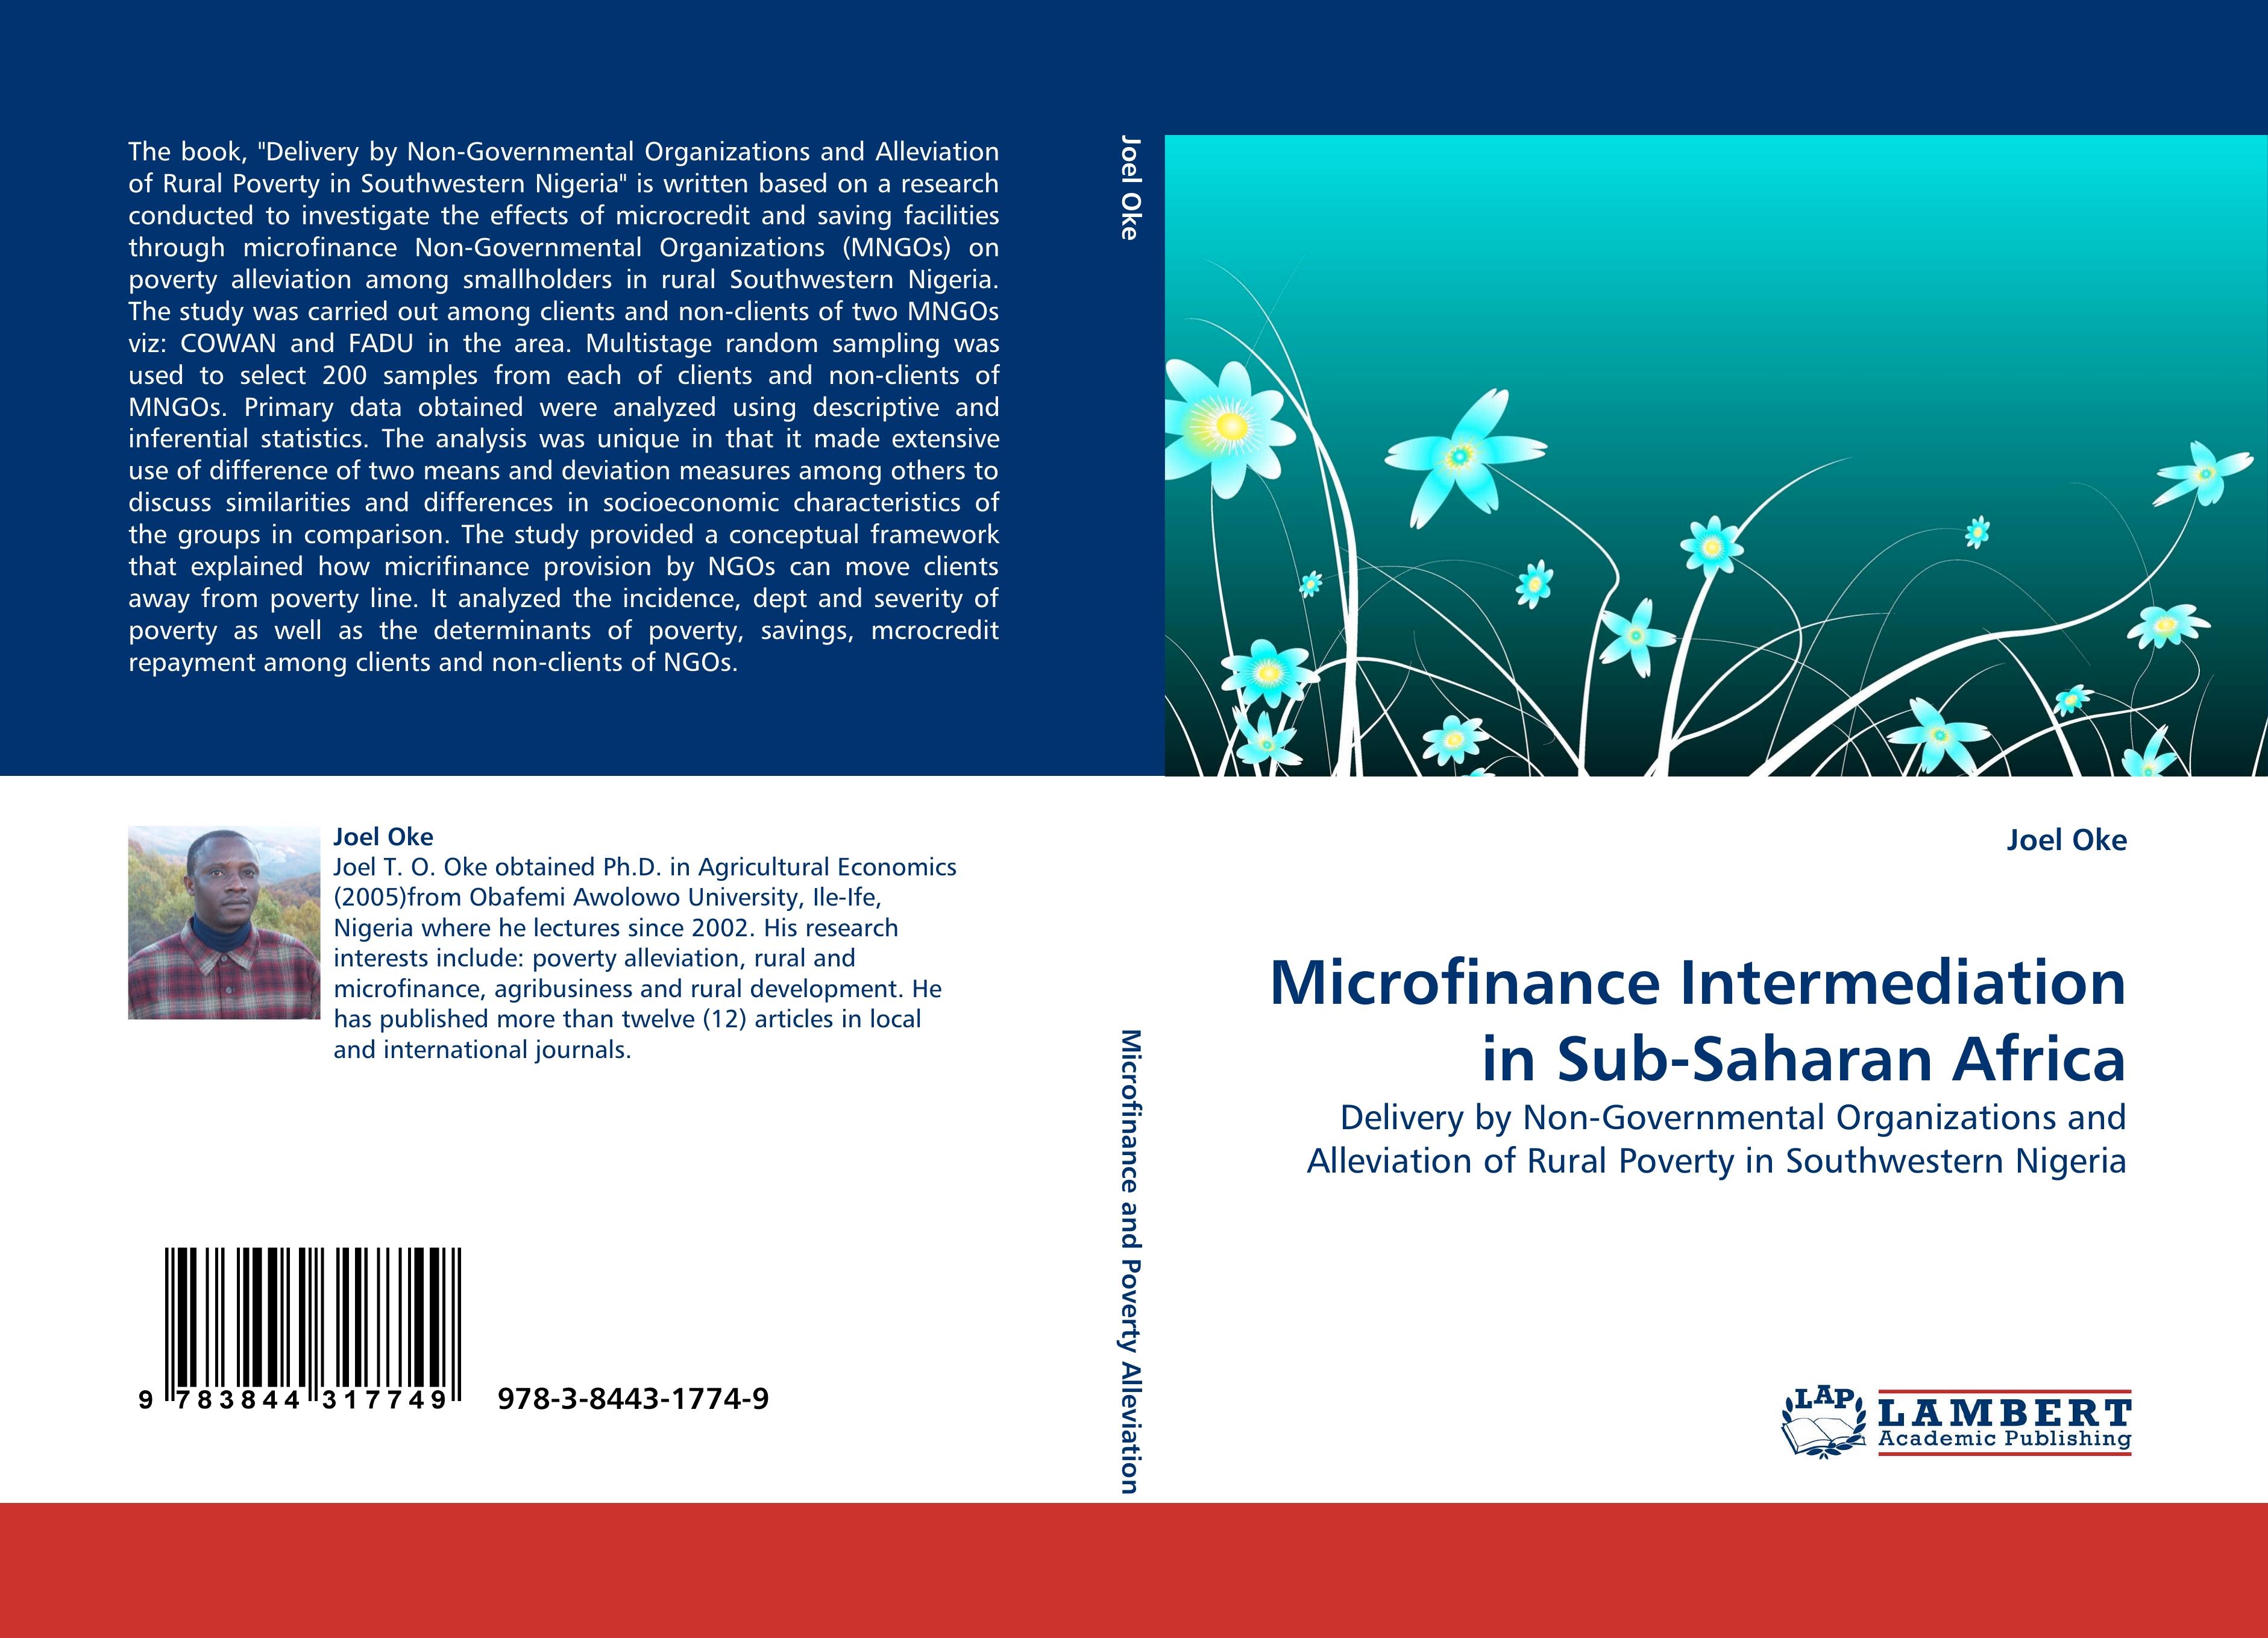 Microfinance Intermediation in Sub-Saharan Africa - Joel Oke